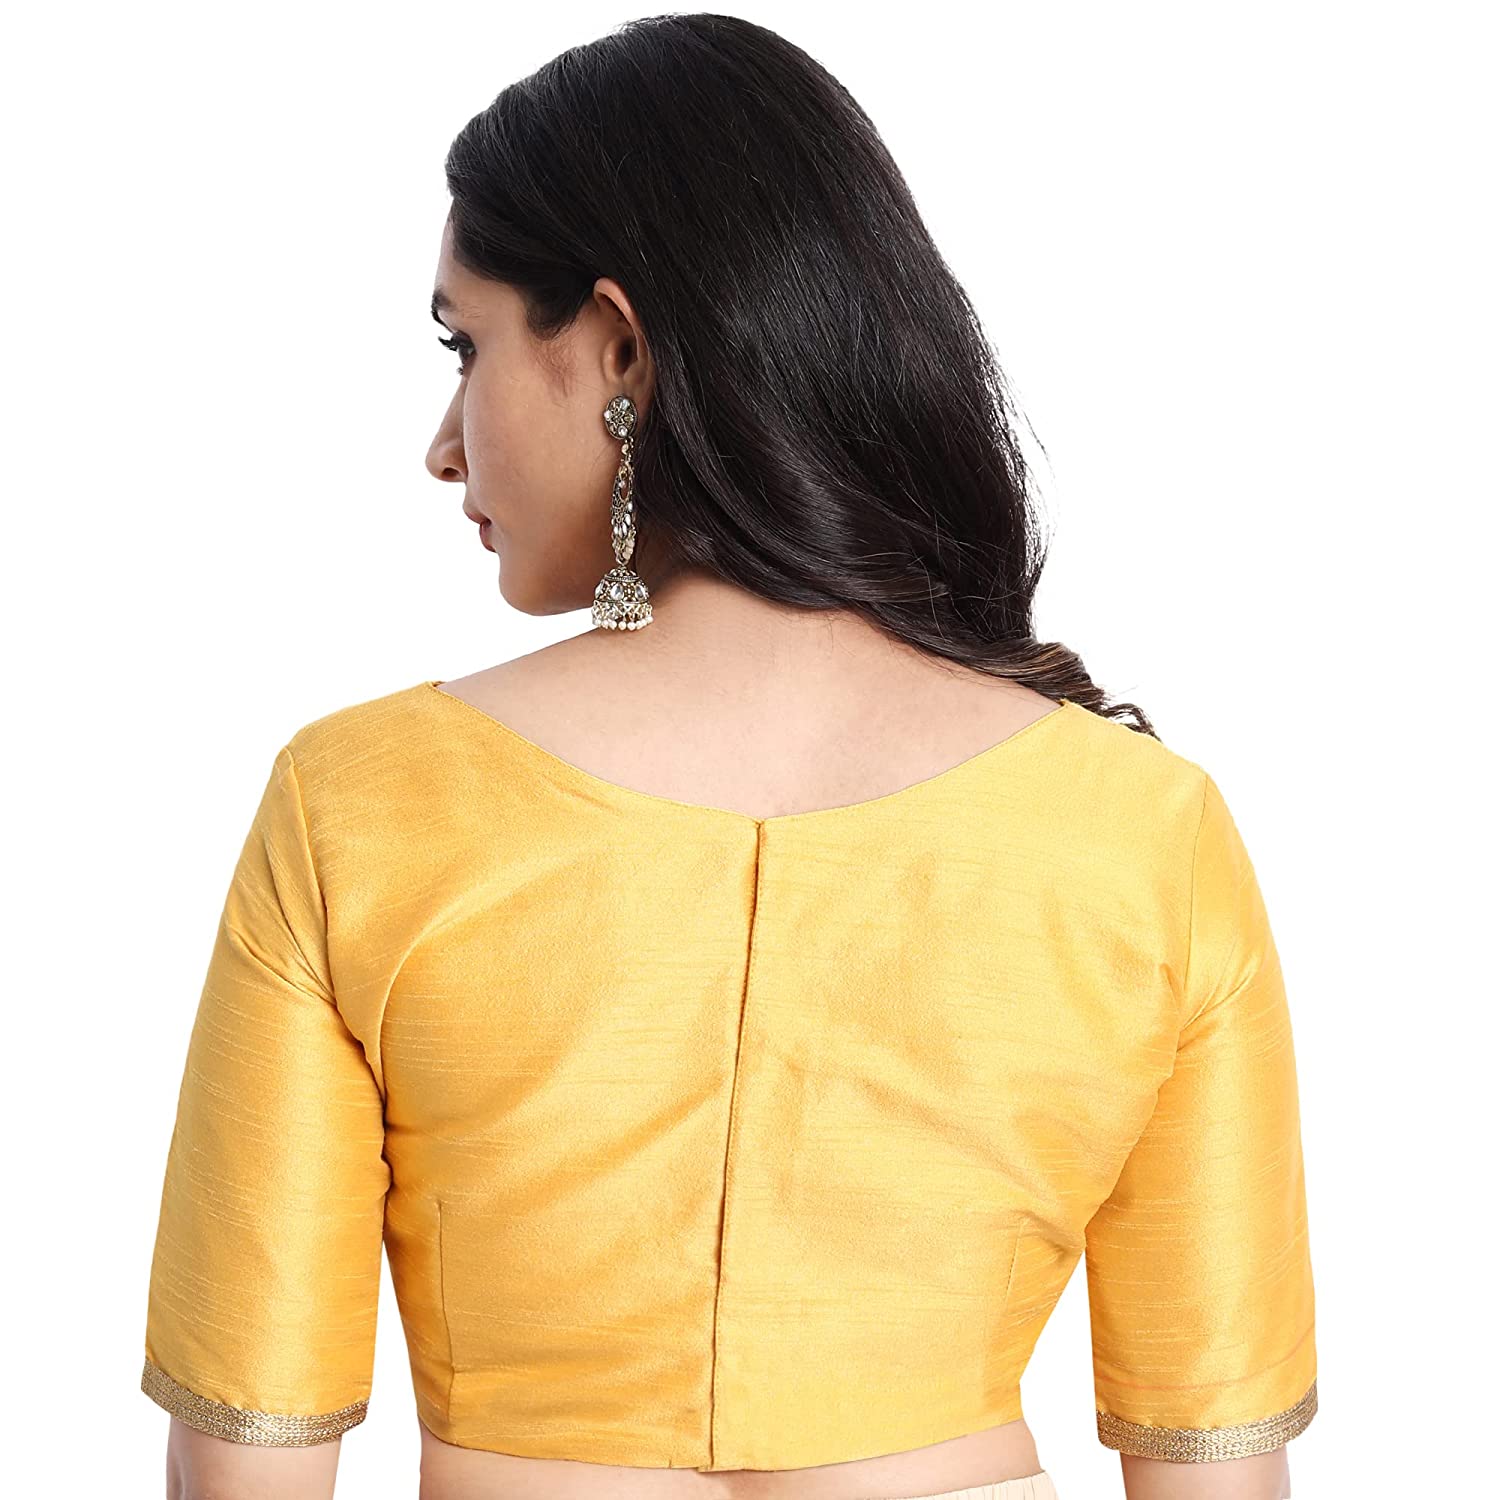 JISB Women's Raw Silk Saree Blouse, Yellow